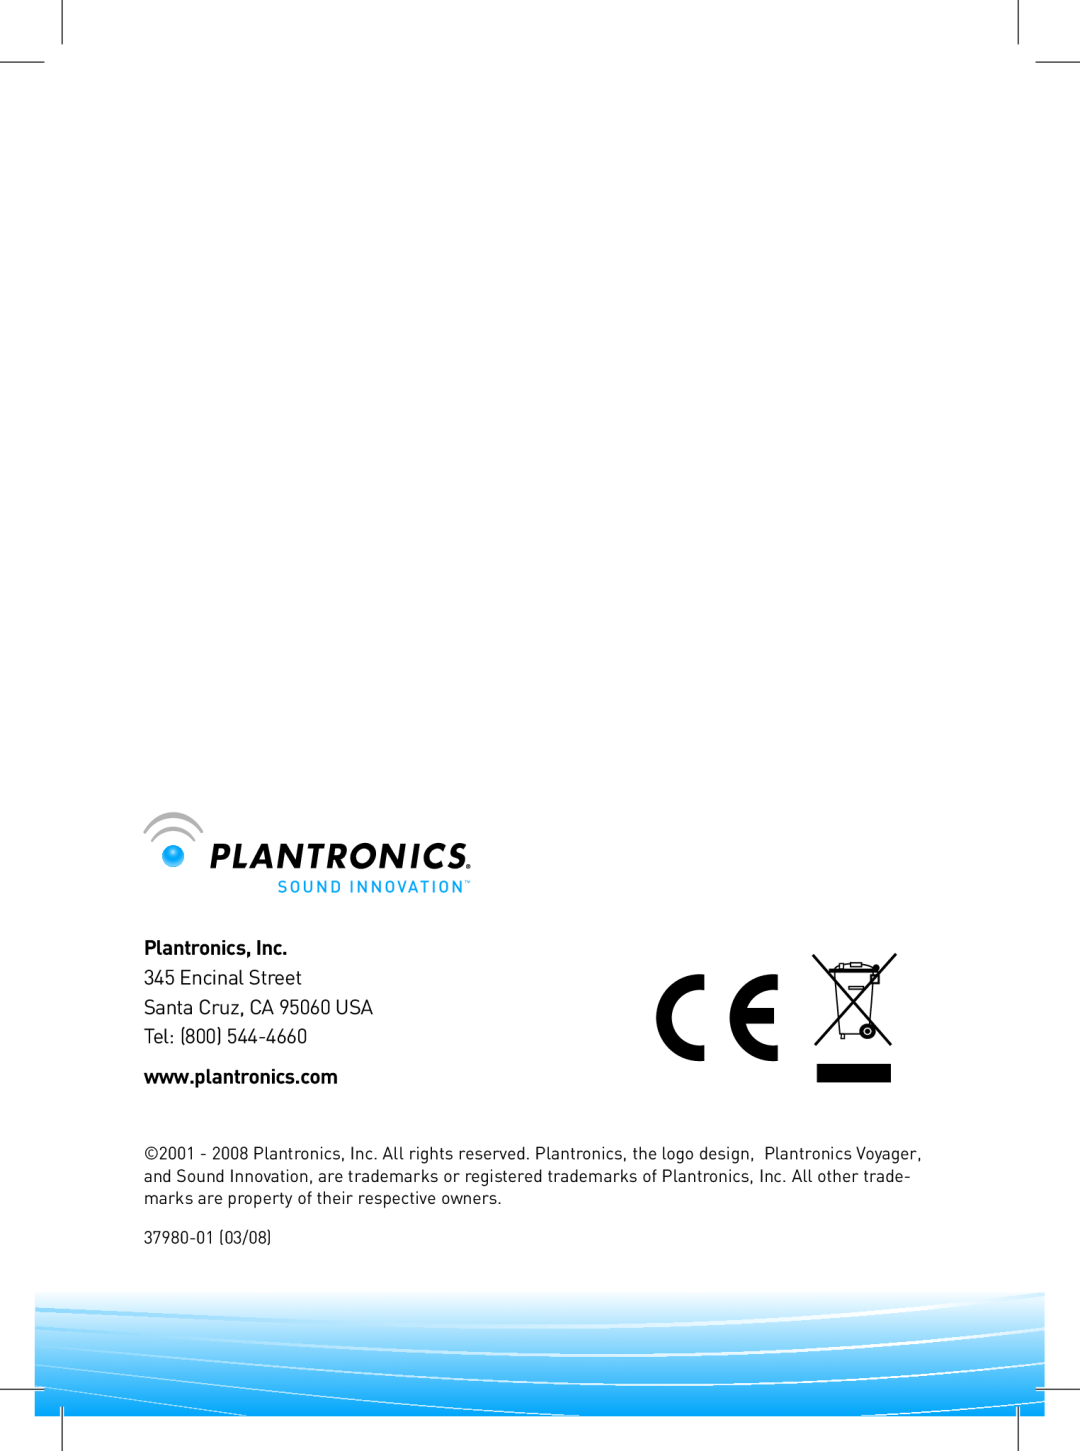 Plantronics APC-4 Plantronics, Inc, Encinal Street Santa Cruz, CA 95060 USA Tel 800, Sound Innovation, 37980-01 03/08 